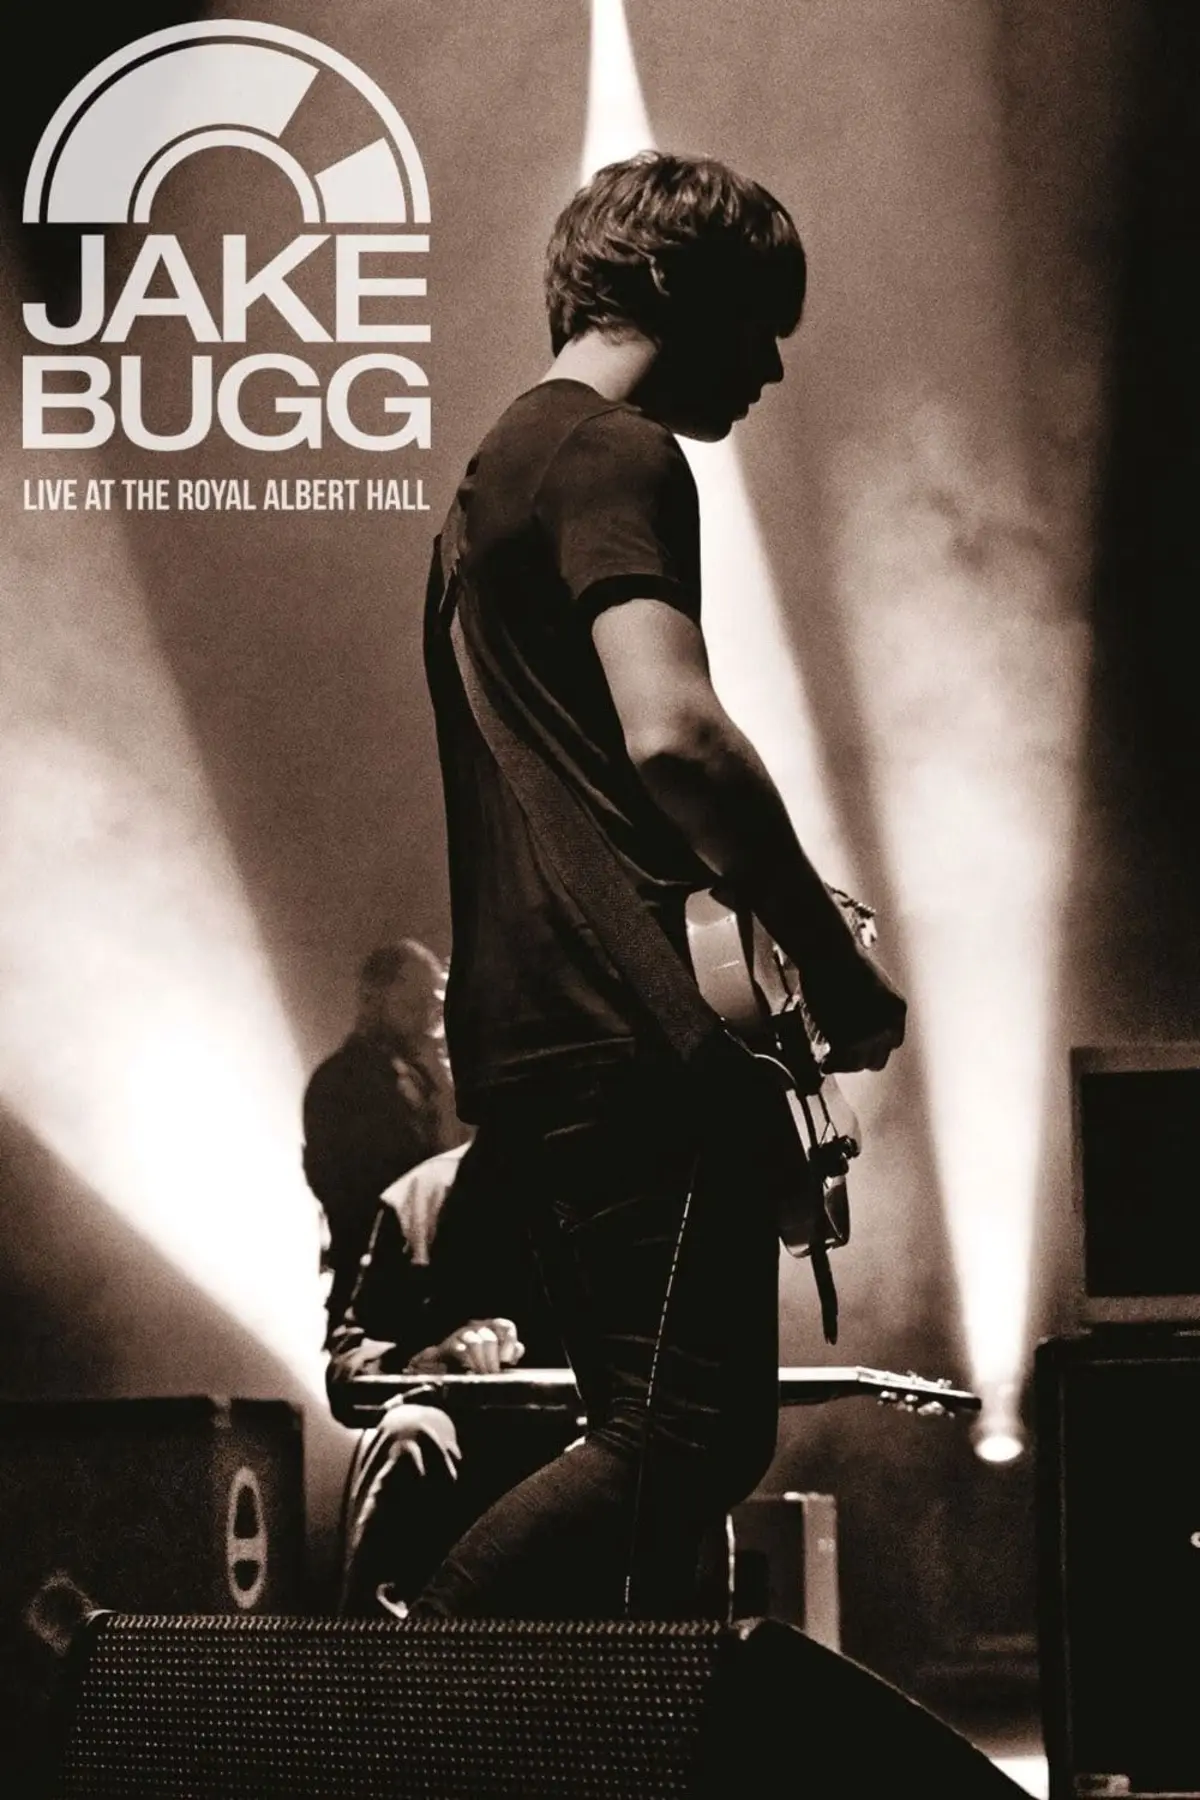 Jake Bugg - Live at the Royal Albert Hall